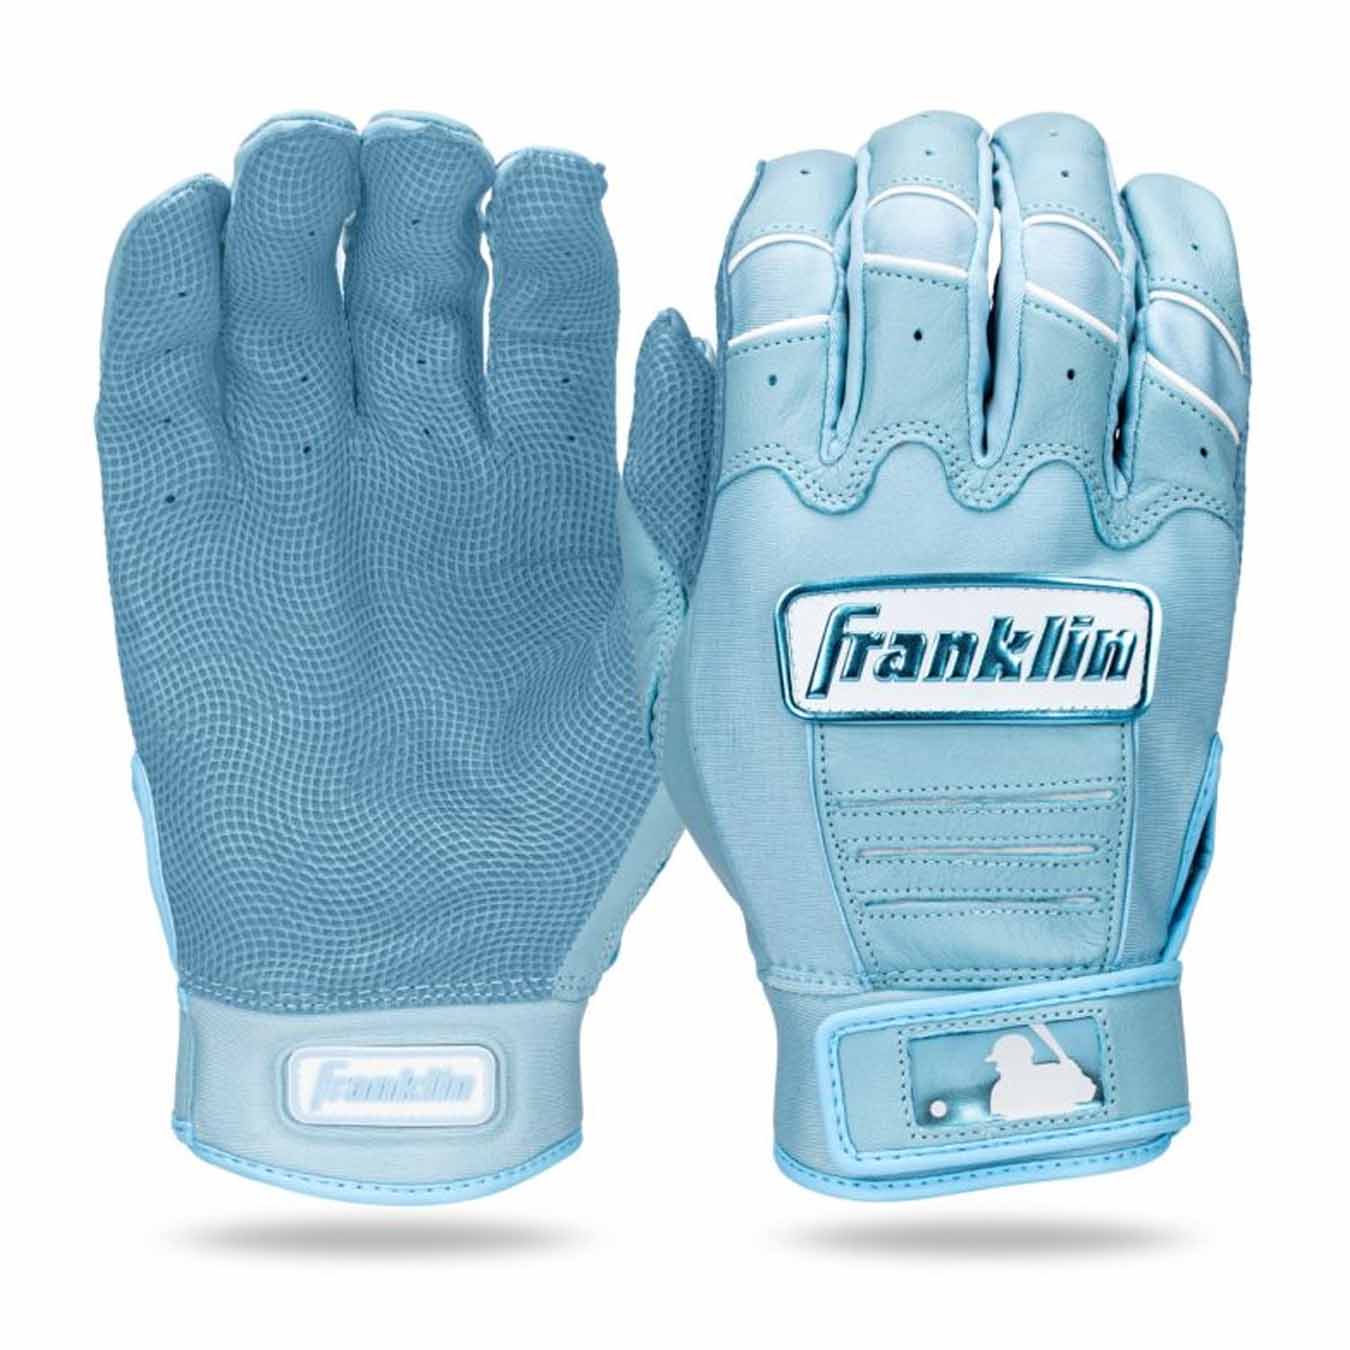 Franklin CFX Pro Hi-Lite Series Batting Gloves